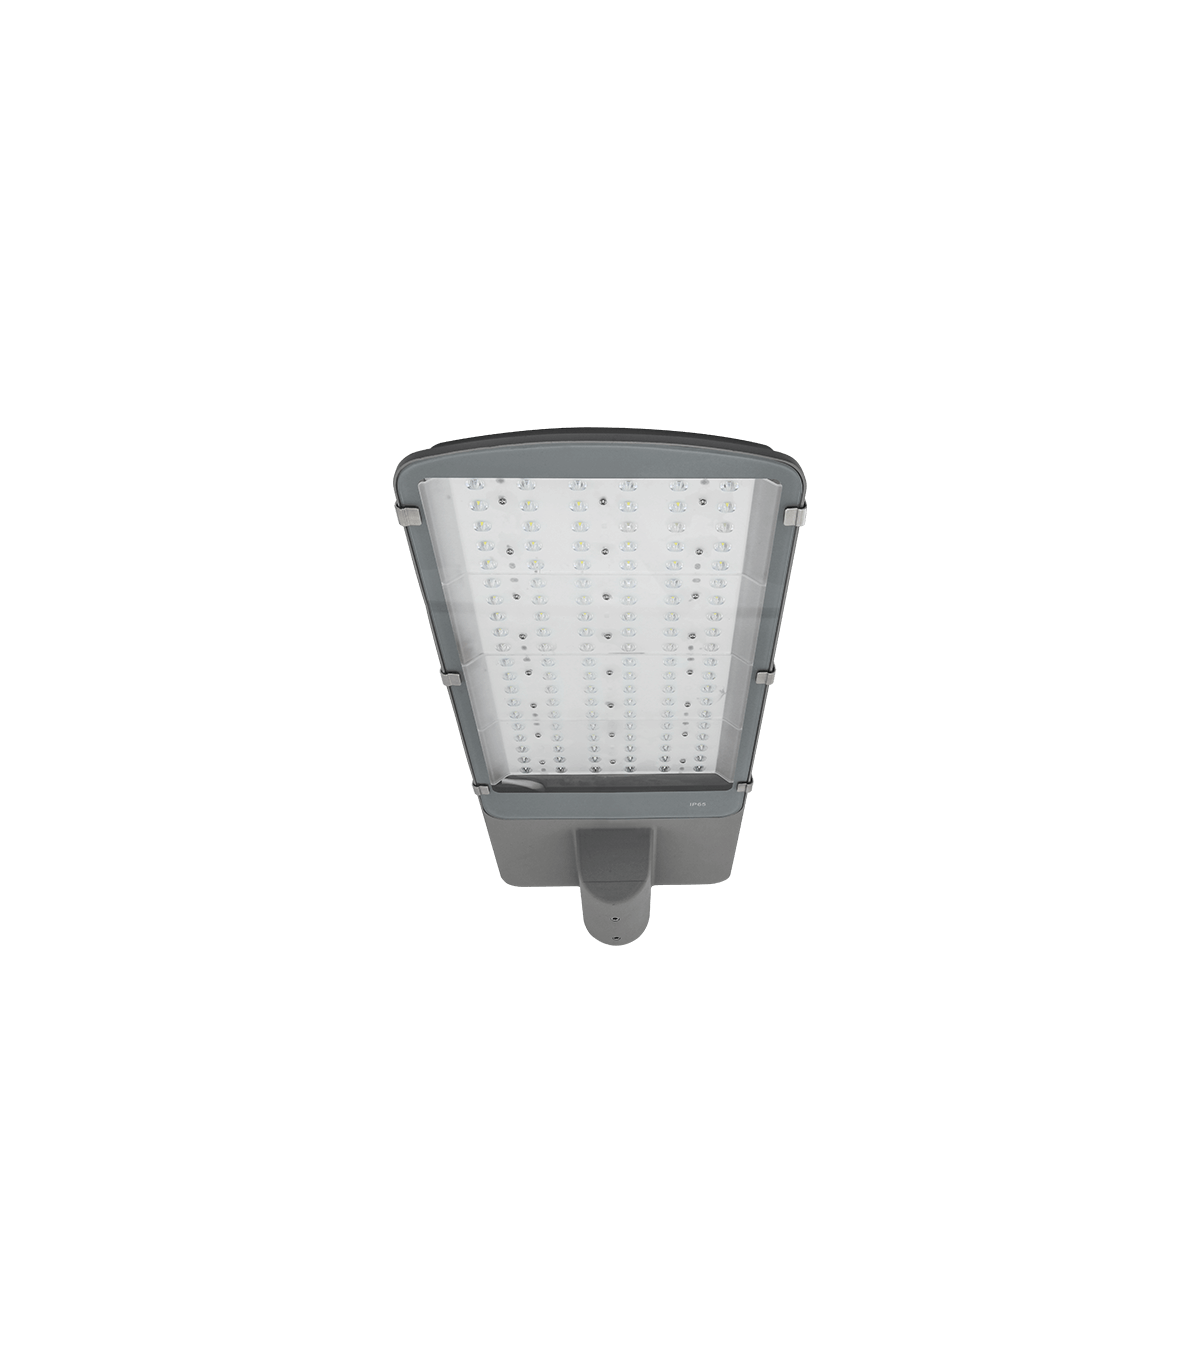 Acheter Module de Lampe de rue LED